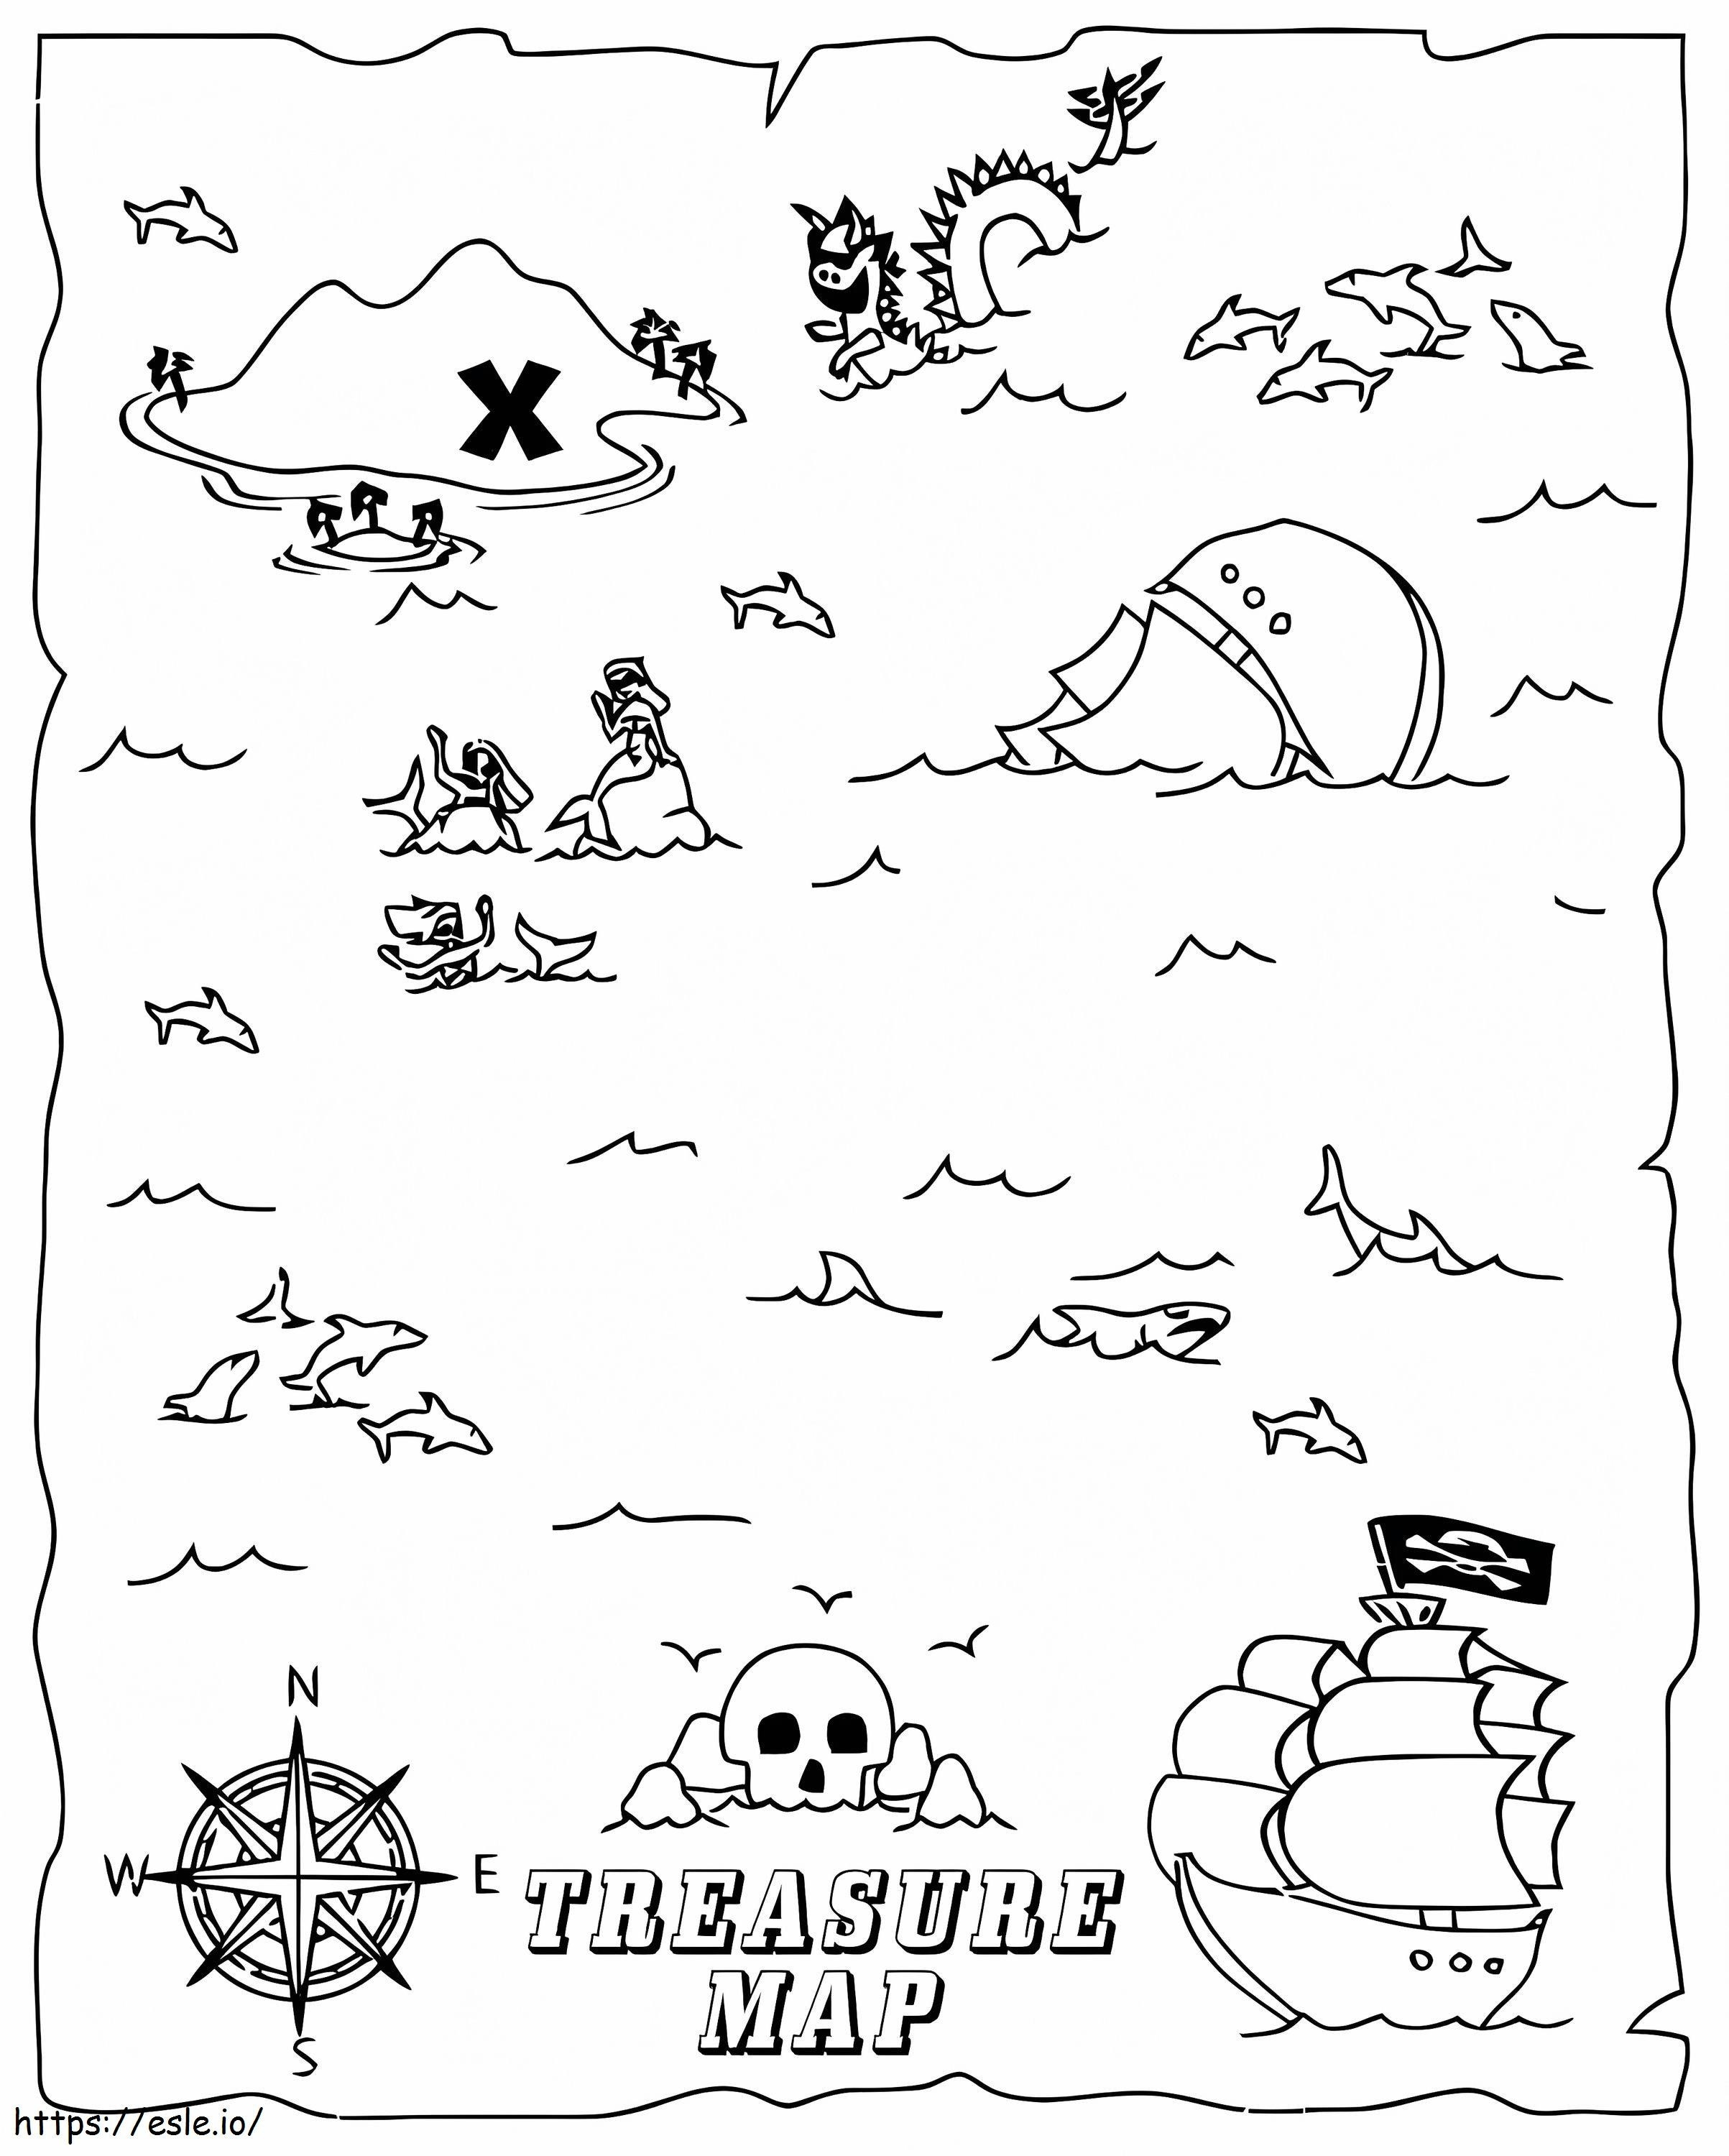 Treasure Map 6 coloring page